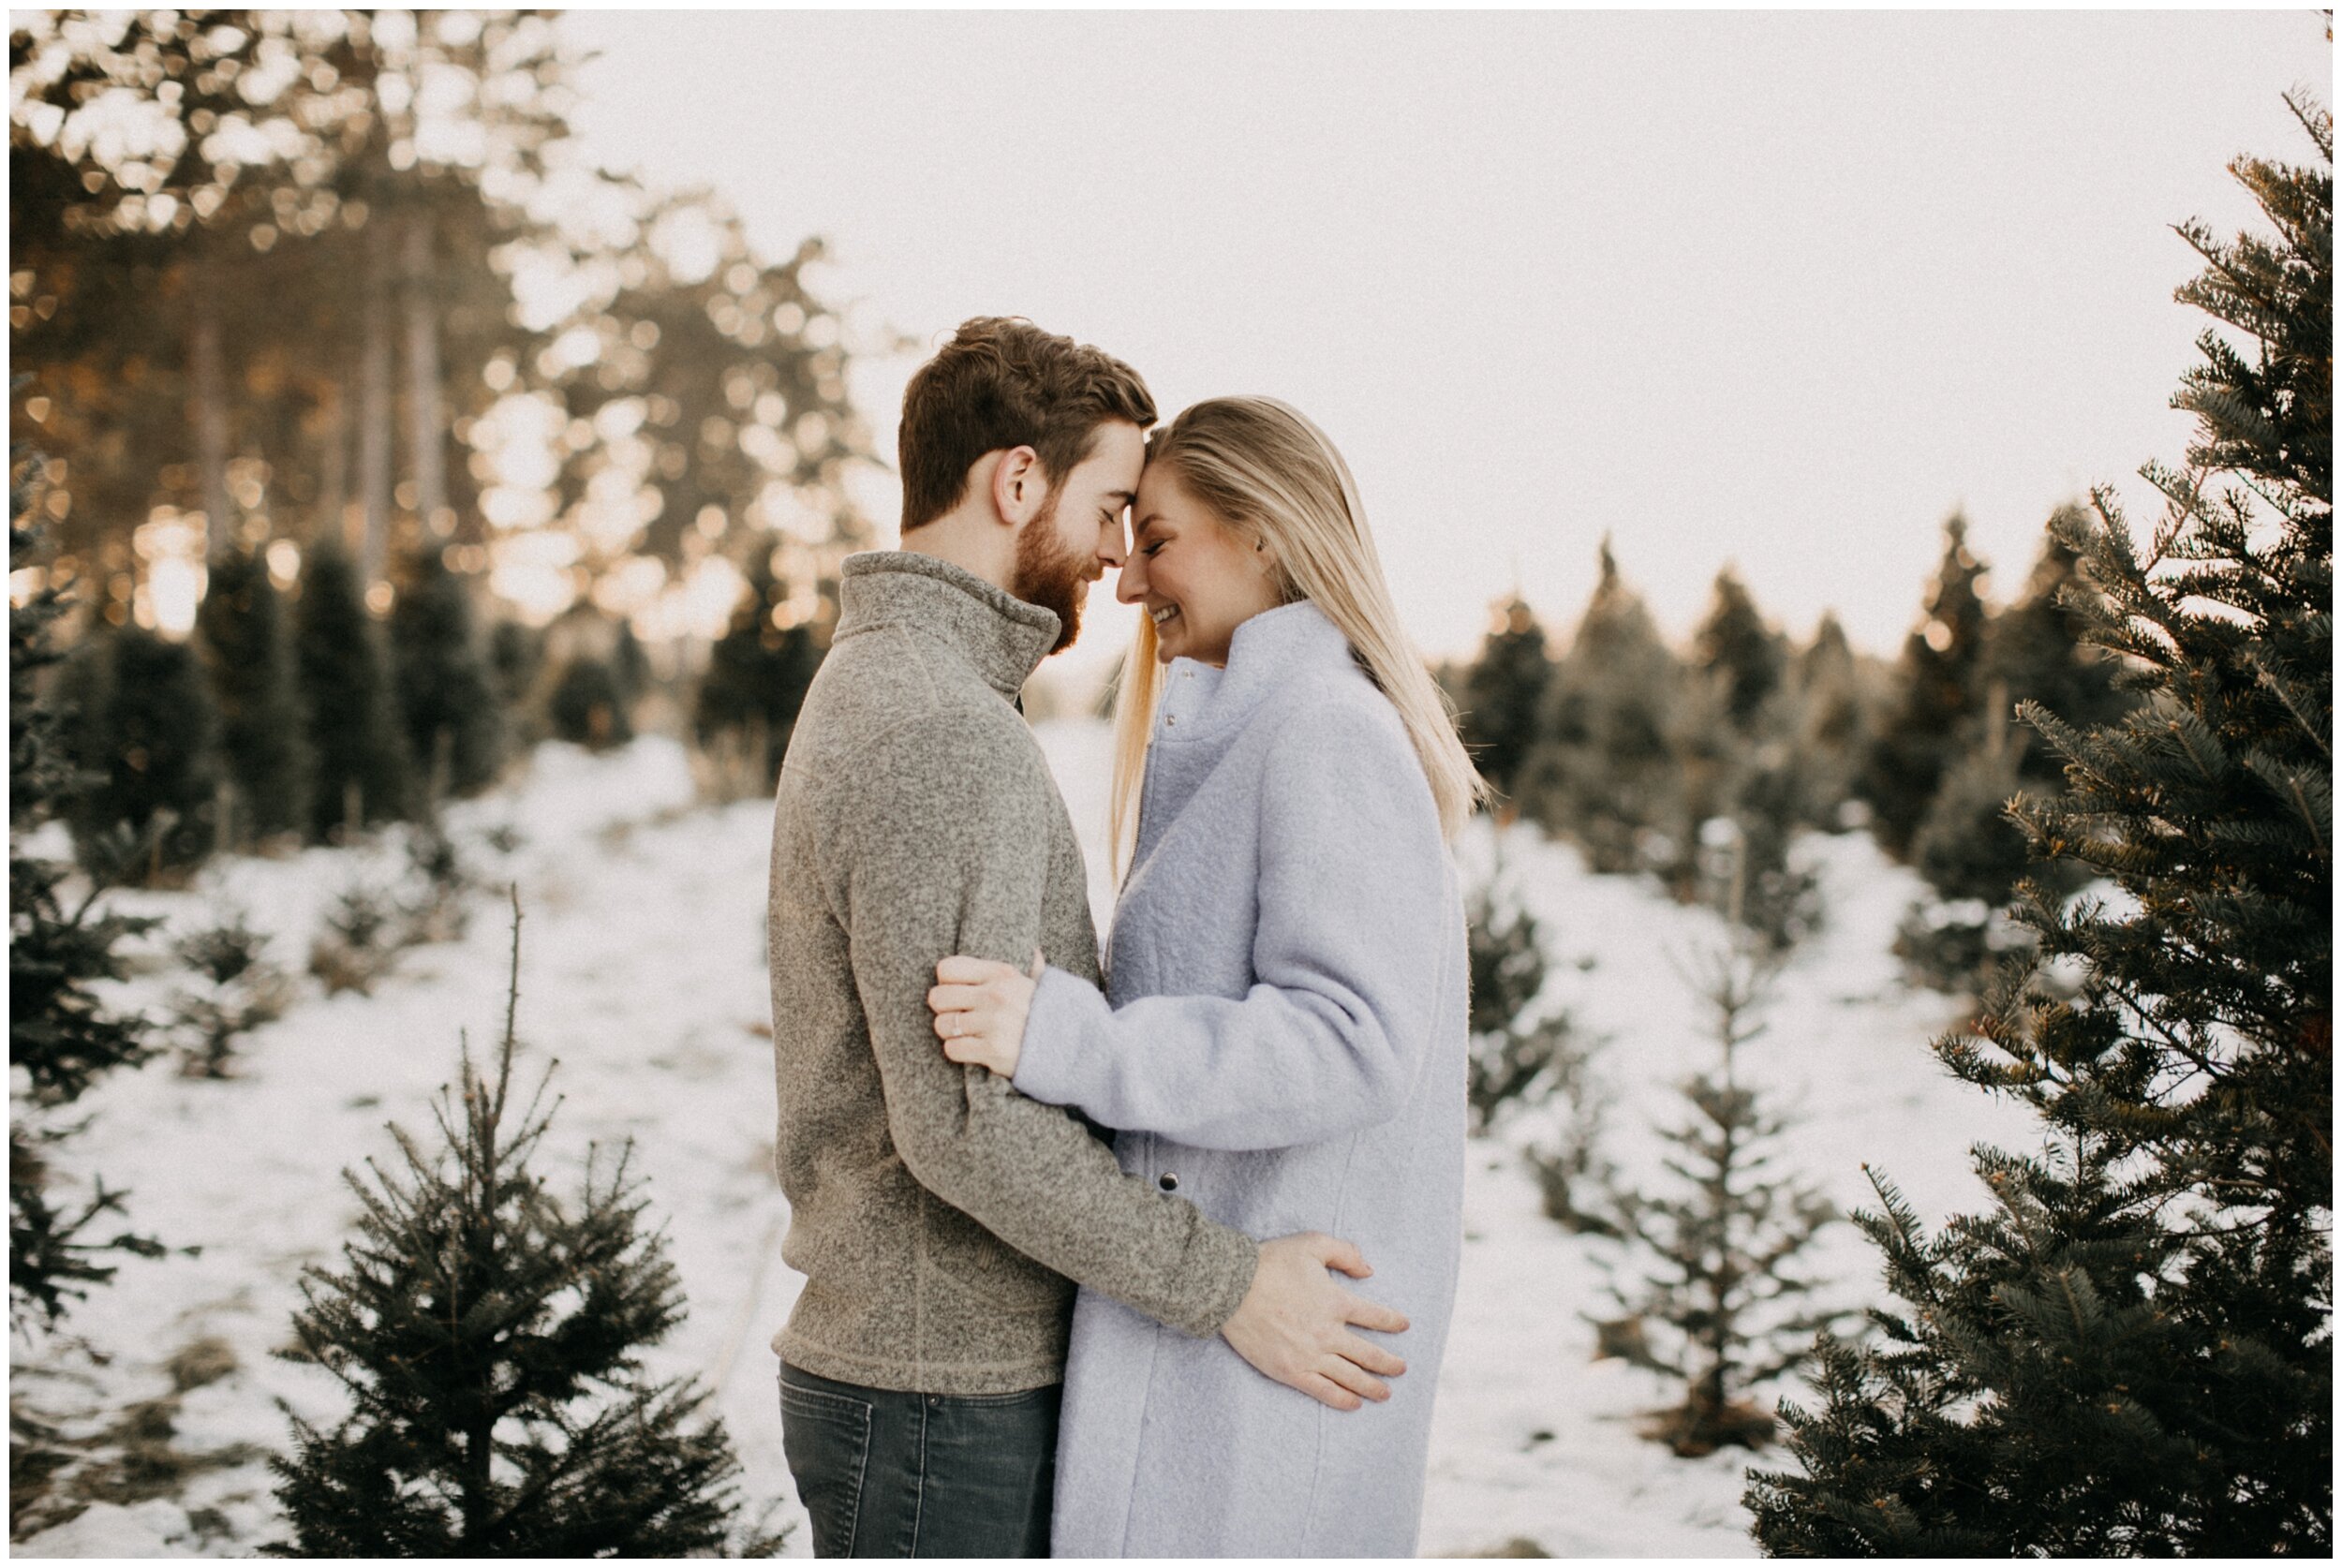 Engaged couple hugging at Minnesota Christmas tree farm during sunset